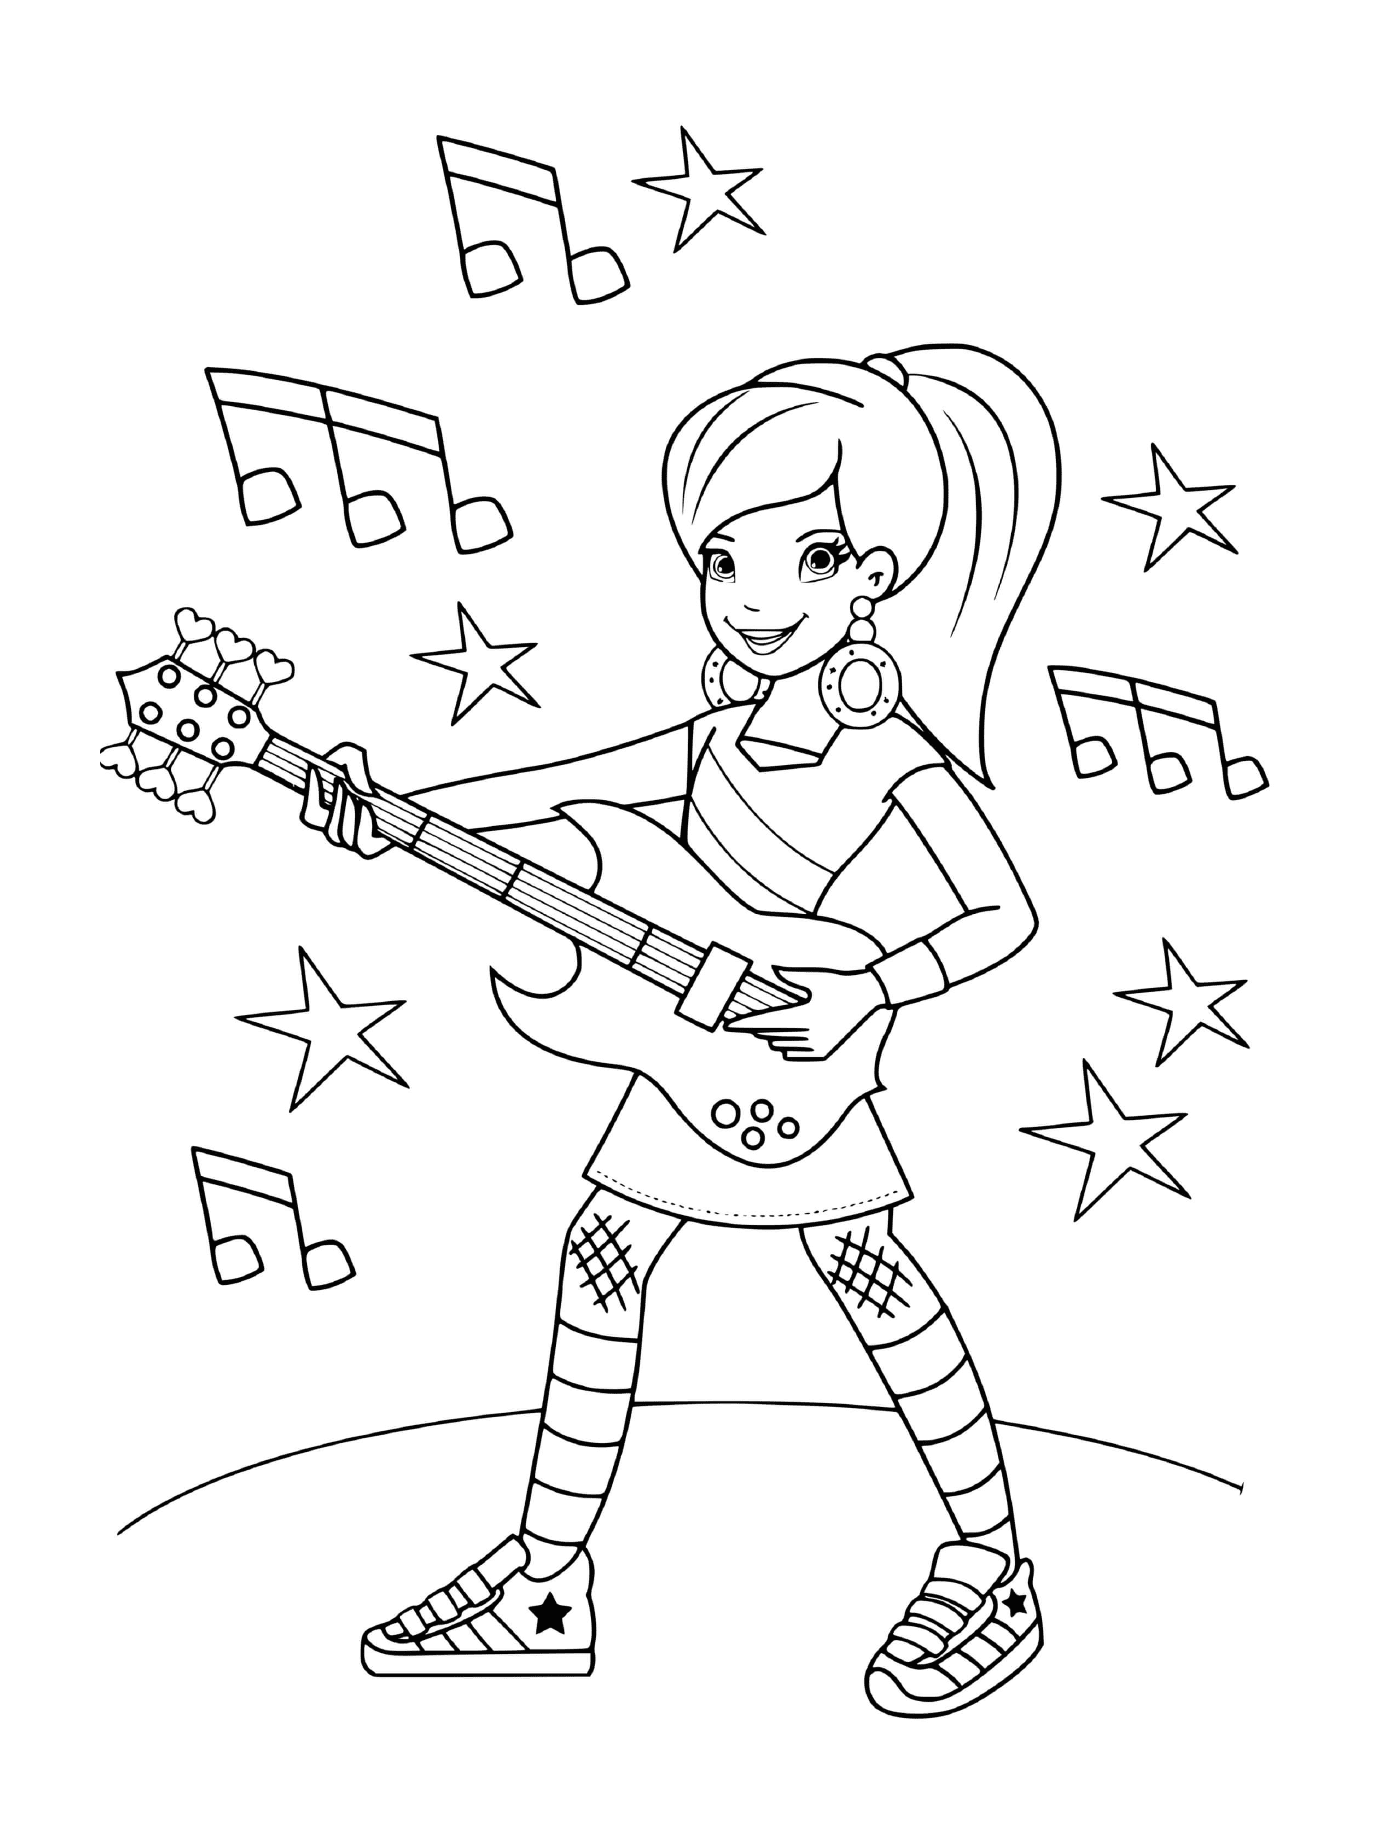  A girl playing guitar 